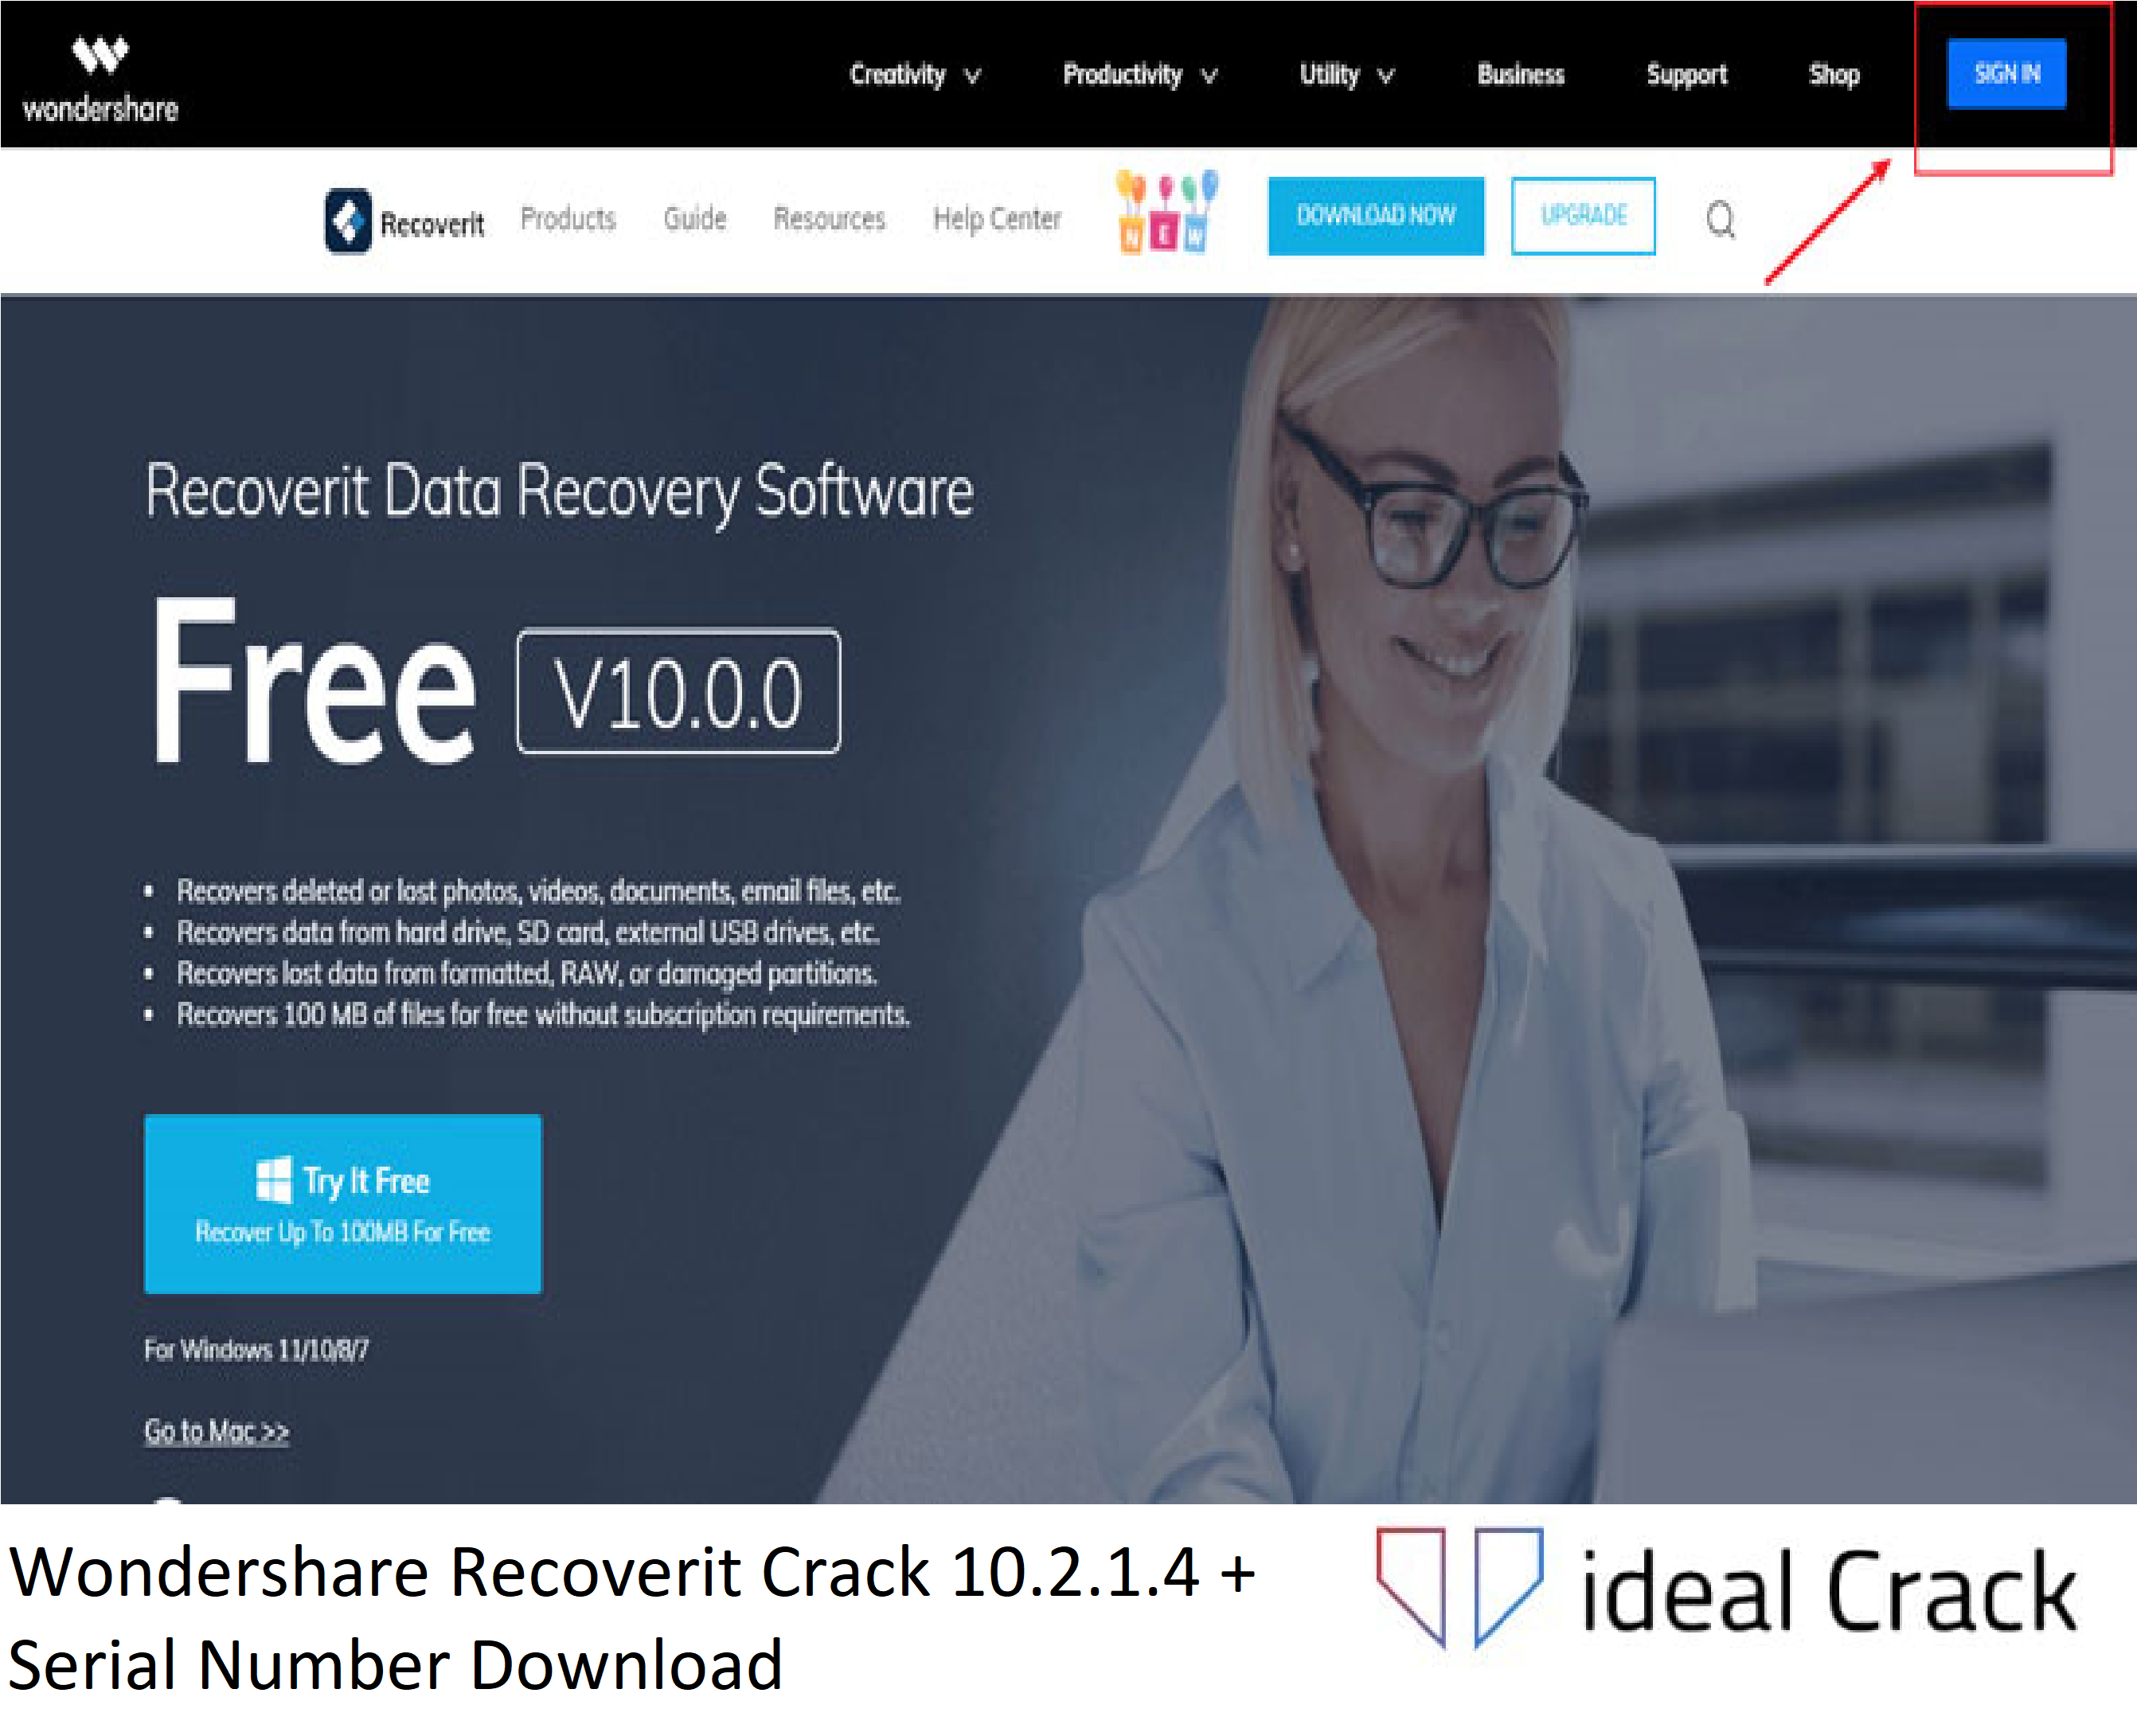 Wondershare Recoverit Crack 10.2.1.4 + Serial Number Download